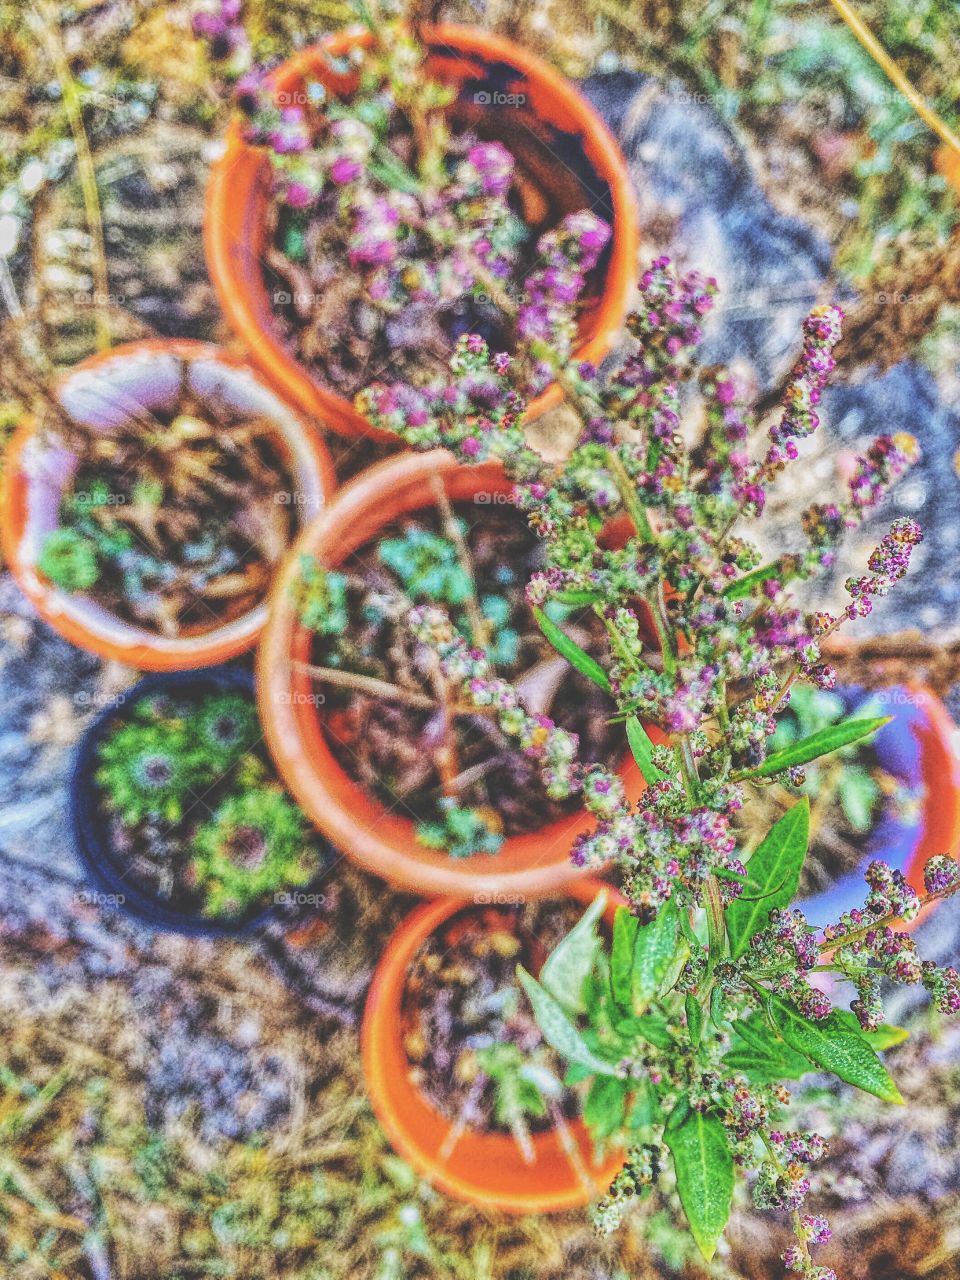 Pretty purple weed. 